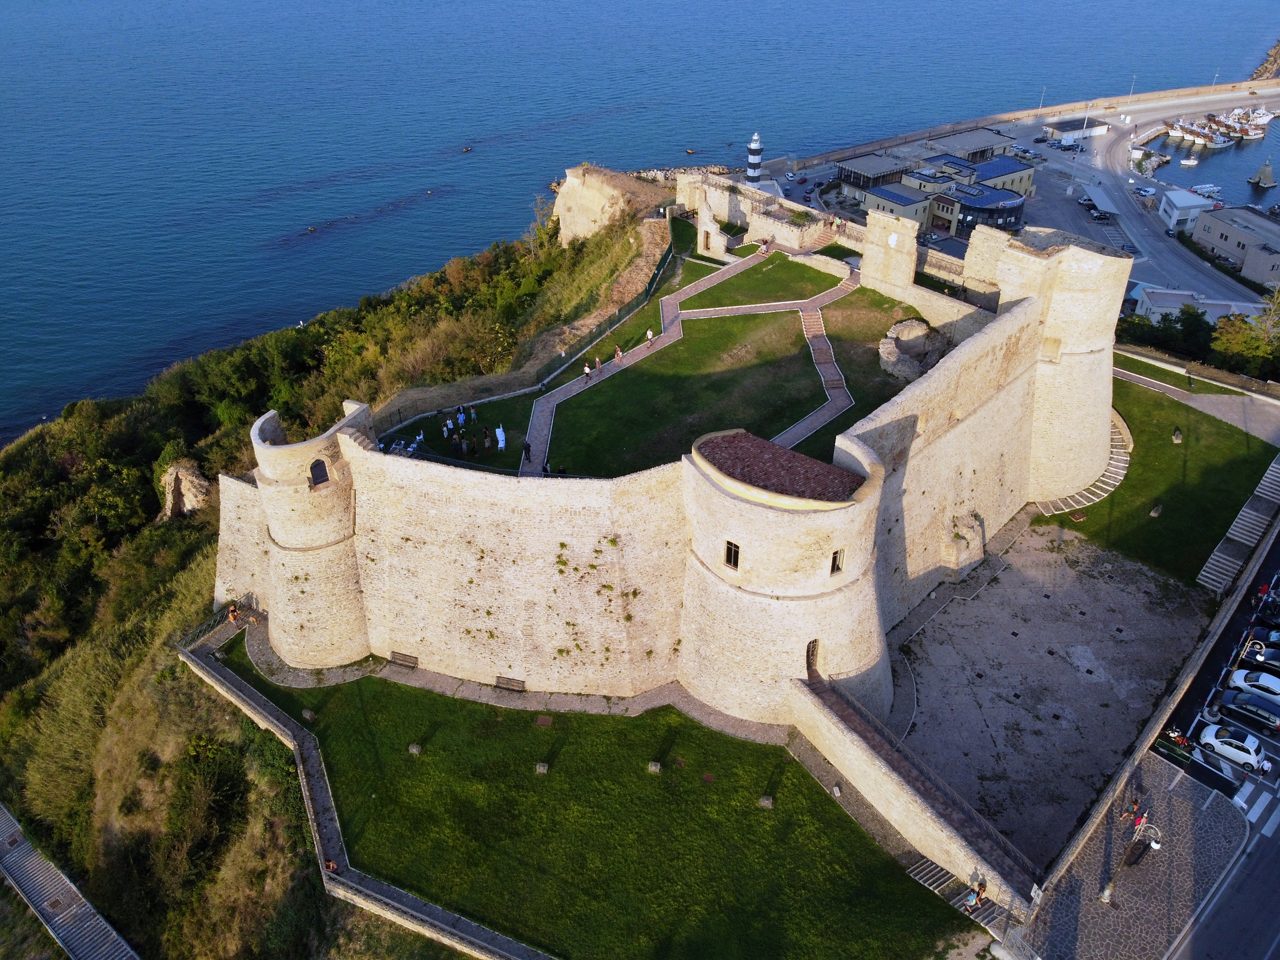 Ortona, Chieti, Abruzzo / Italy - 08/13/2020: Aerial view of the ancient Aragonese Castle on the shore of the Adriatic Sea